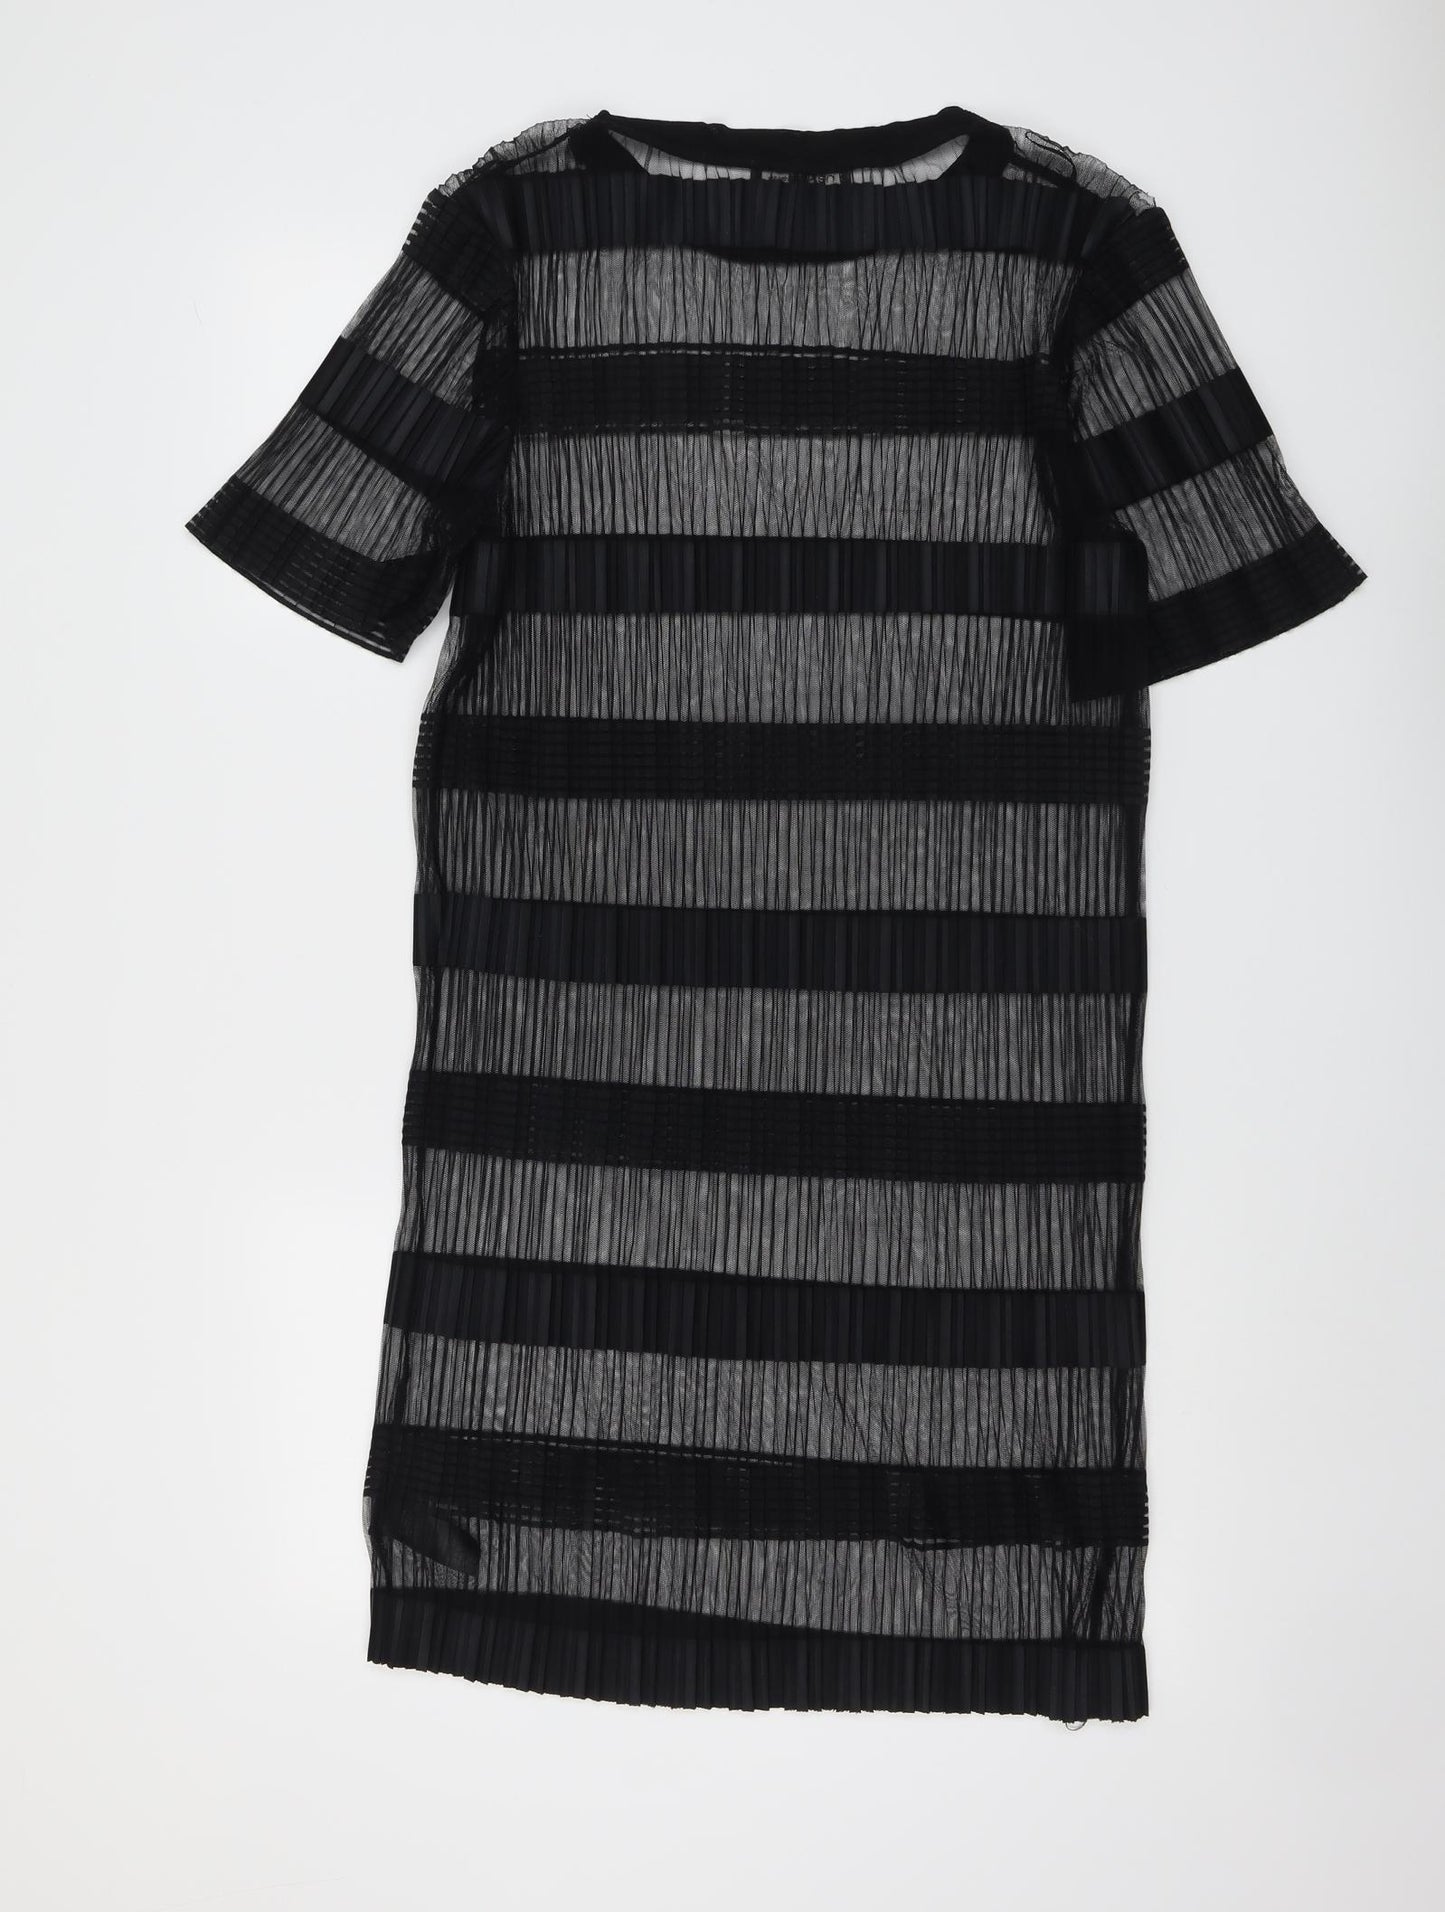 NEXT Womens Black Striped Viscose T-Shirt Dress Size 10 Round Neck Pullover